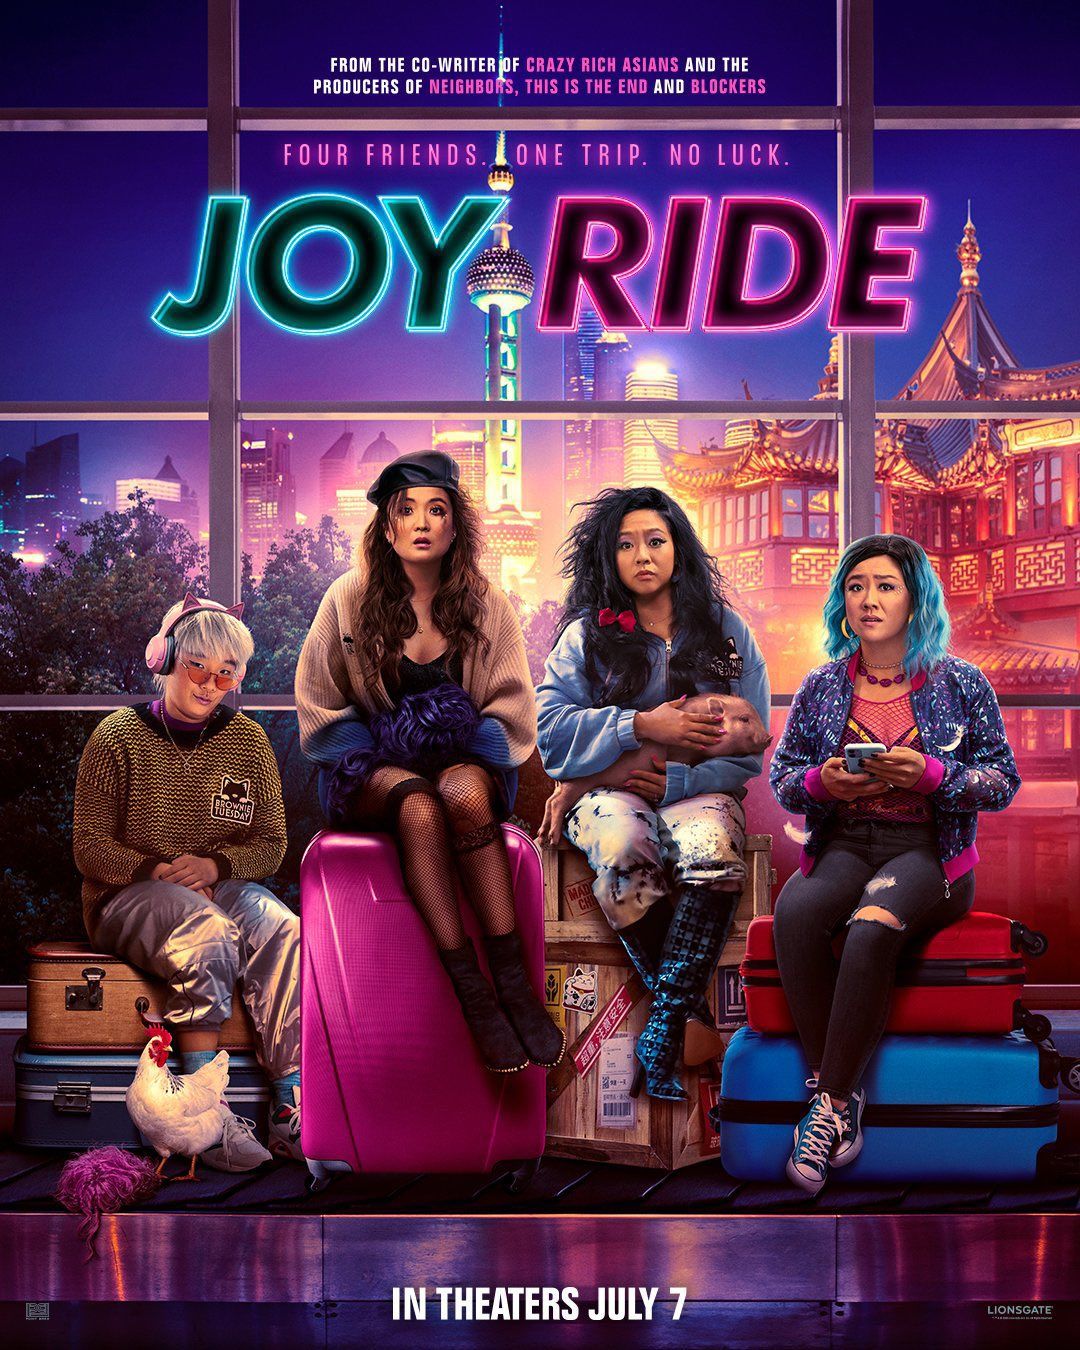 Joy ride poster